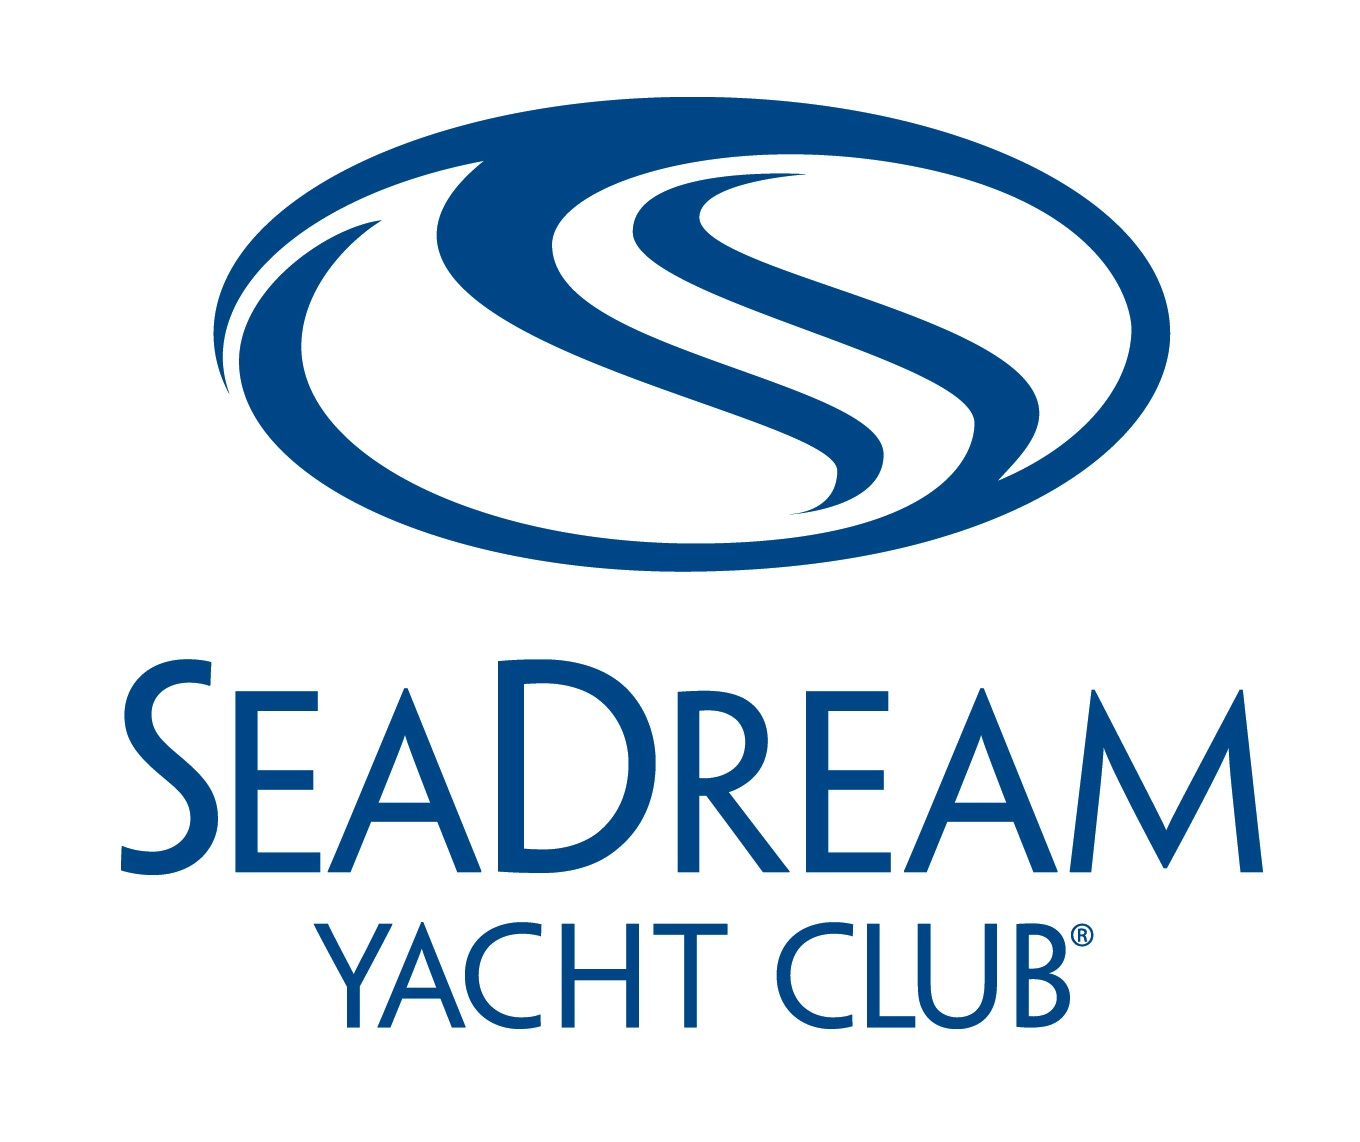 https://0201.nccdn.net/4_2/000/000/04c/a91/SeaDream-Logo-High-Res-1360x1142.jpg